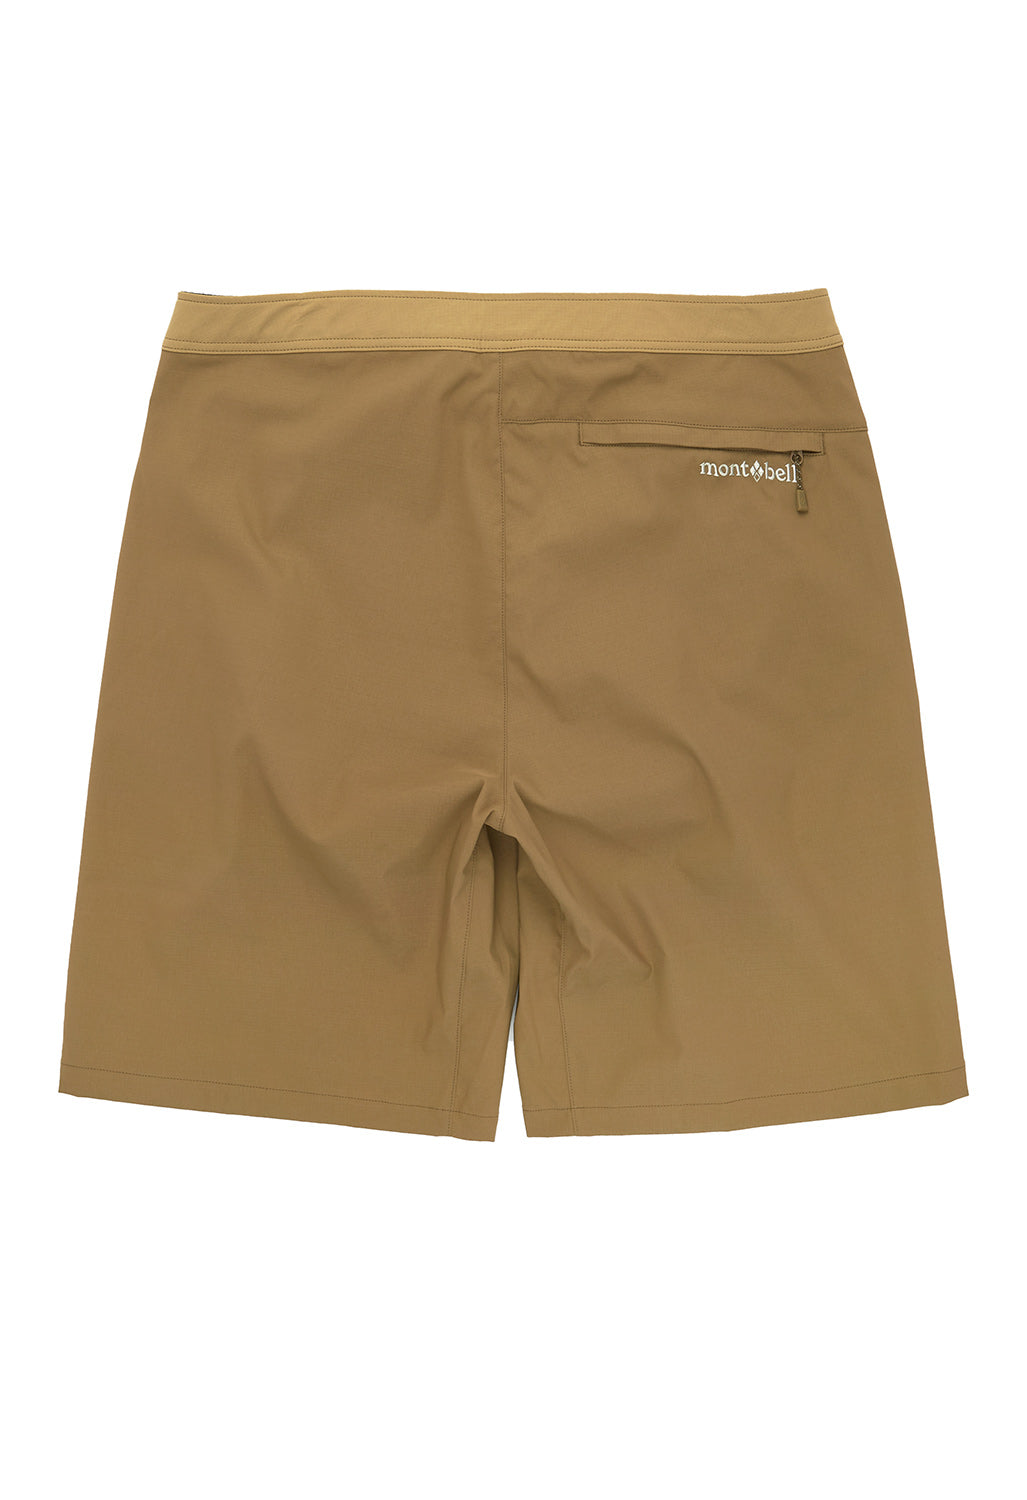 Montbell Men's Canyon Shorts - Tan